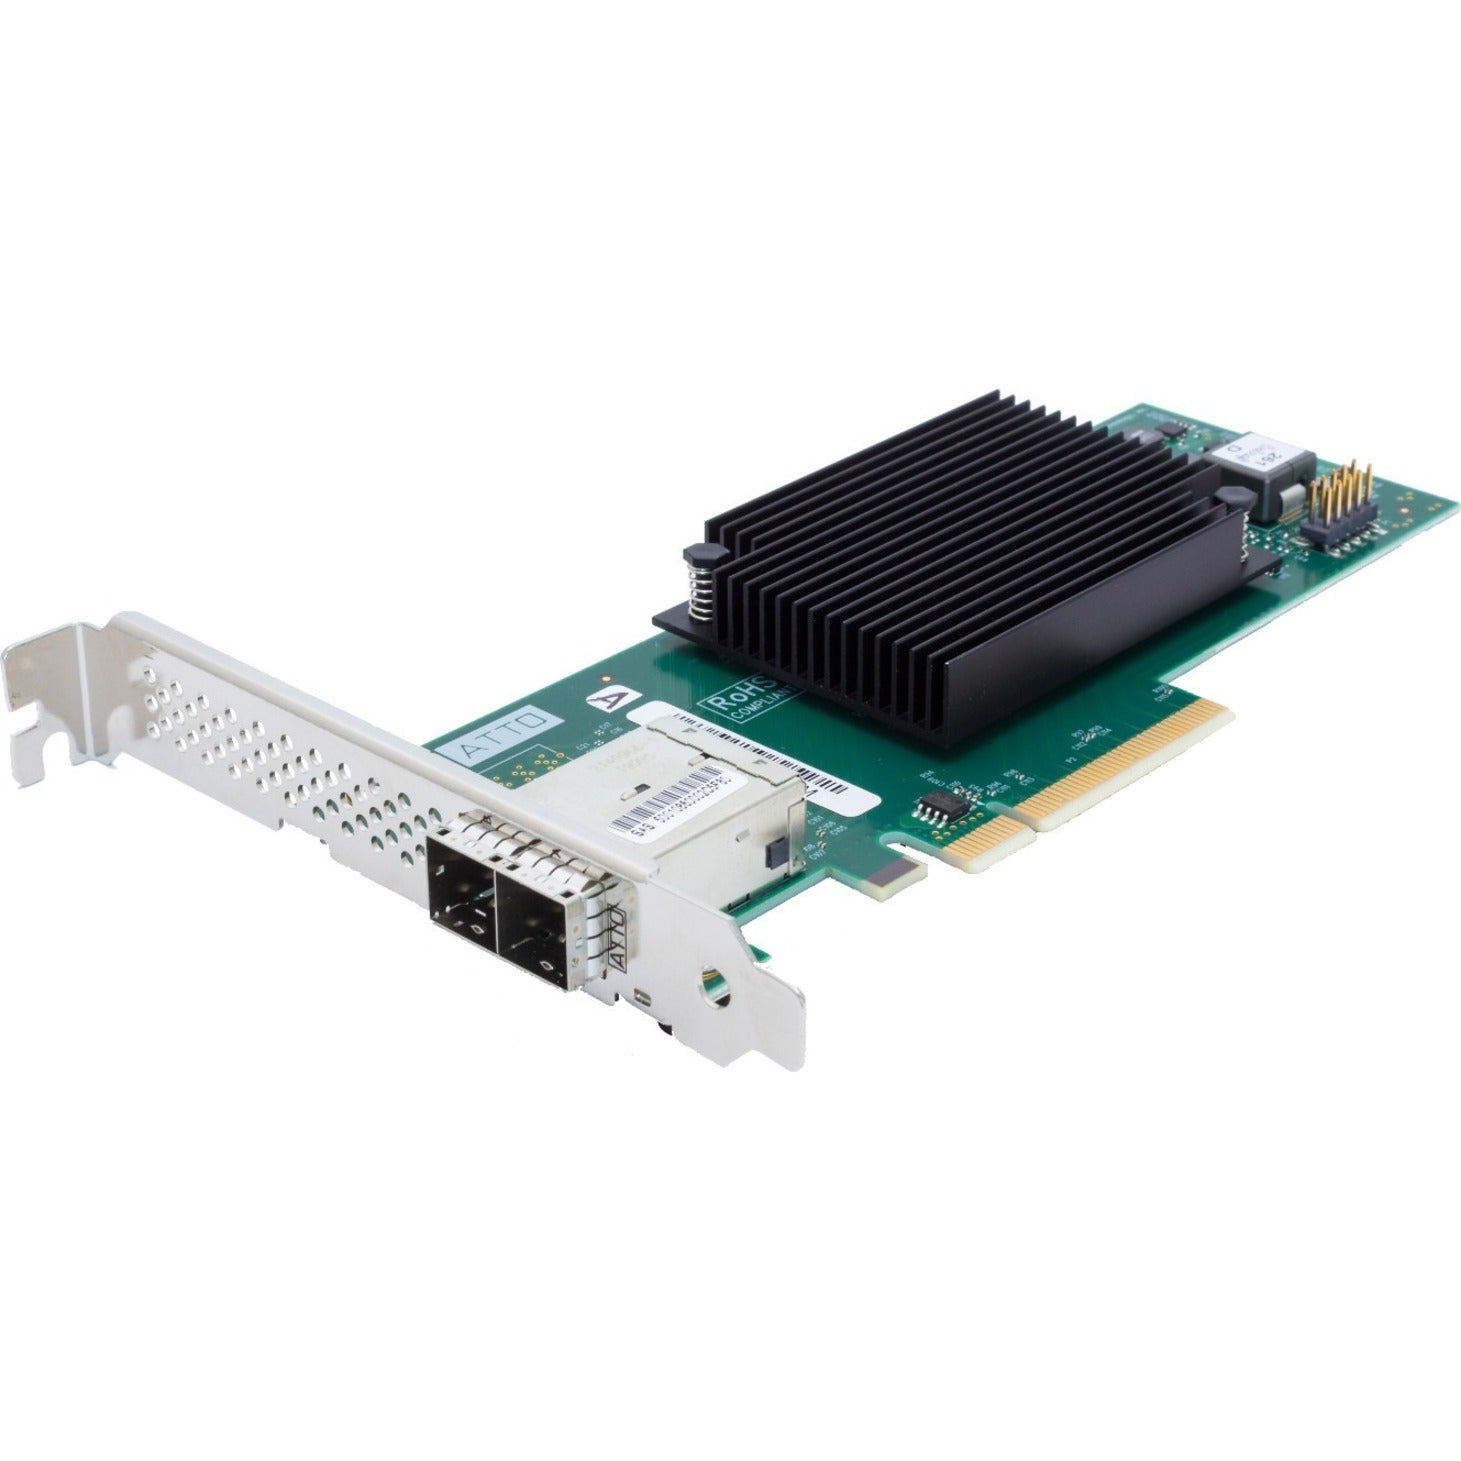 ATTO ESAH-1280-GT0 ExpressSAS 8 External Port 12Gb/s SAS/SATA to PCIe 4.0 Host Bus Adapter, RAID Supported